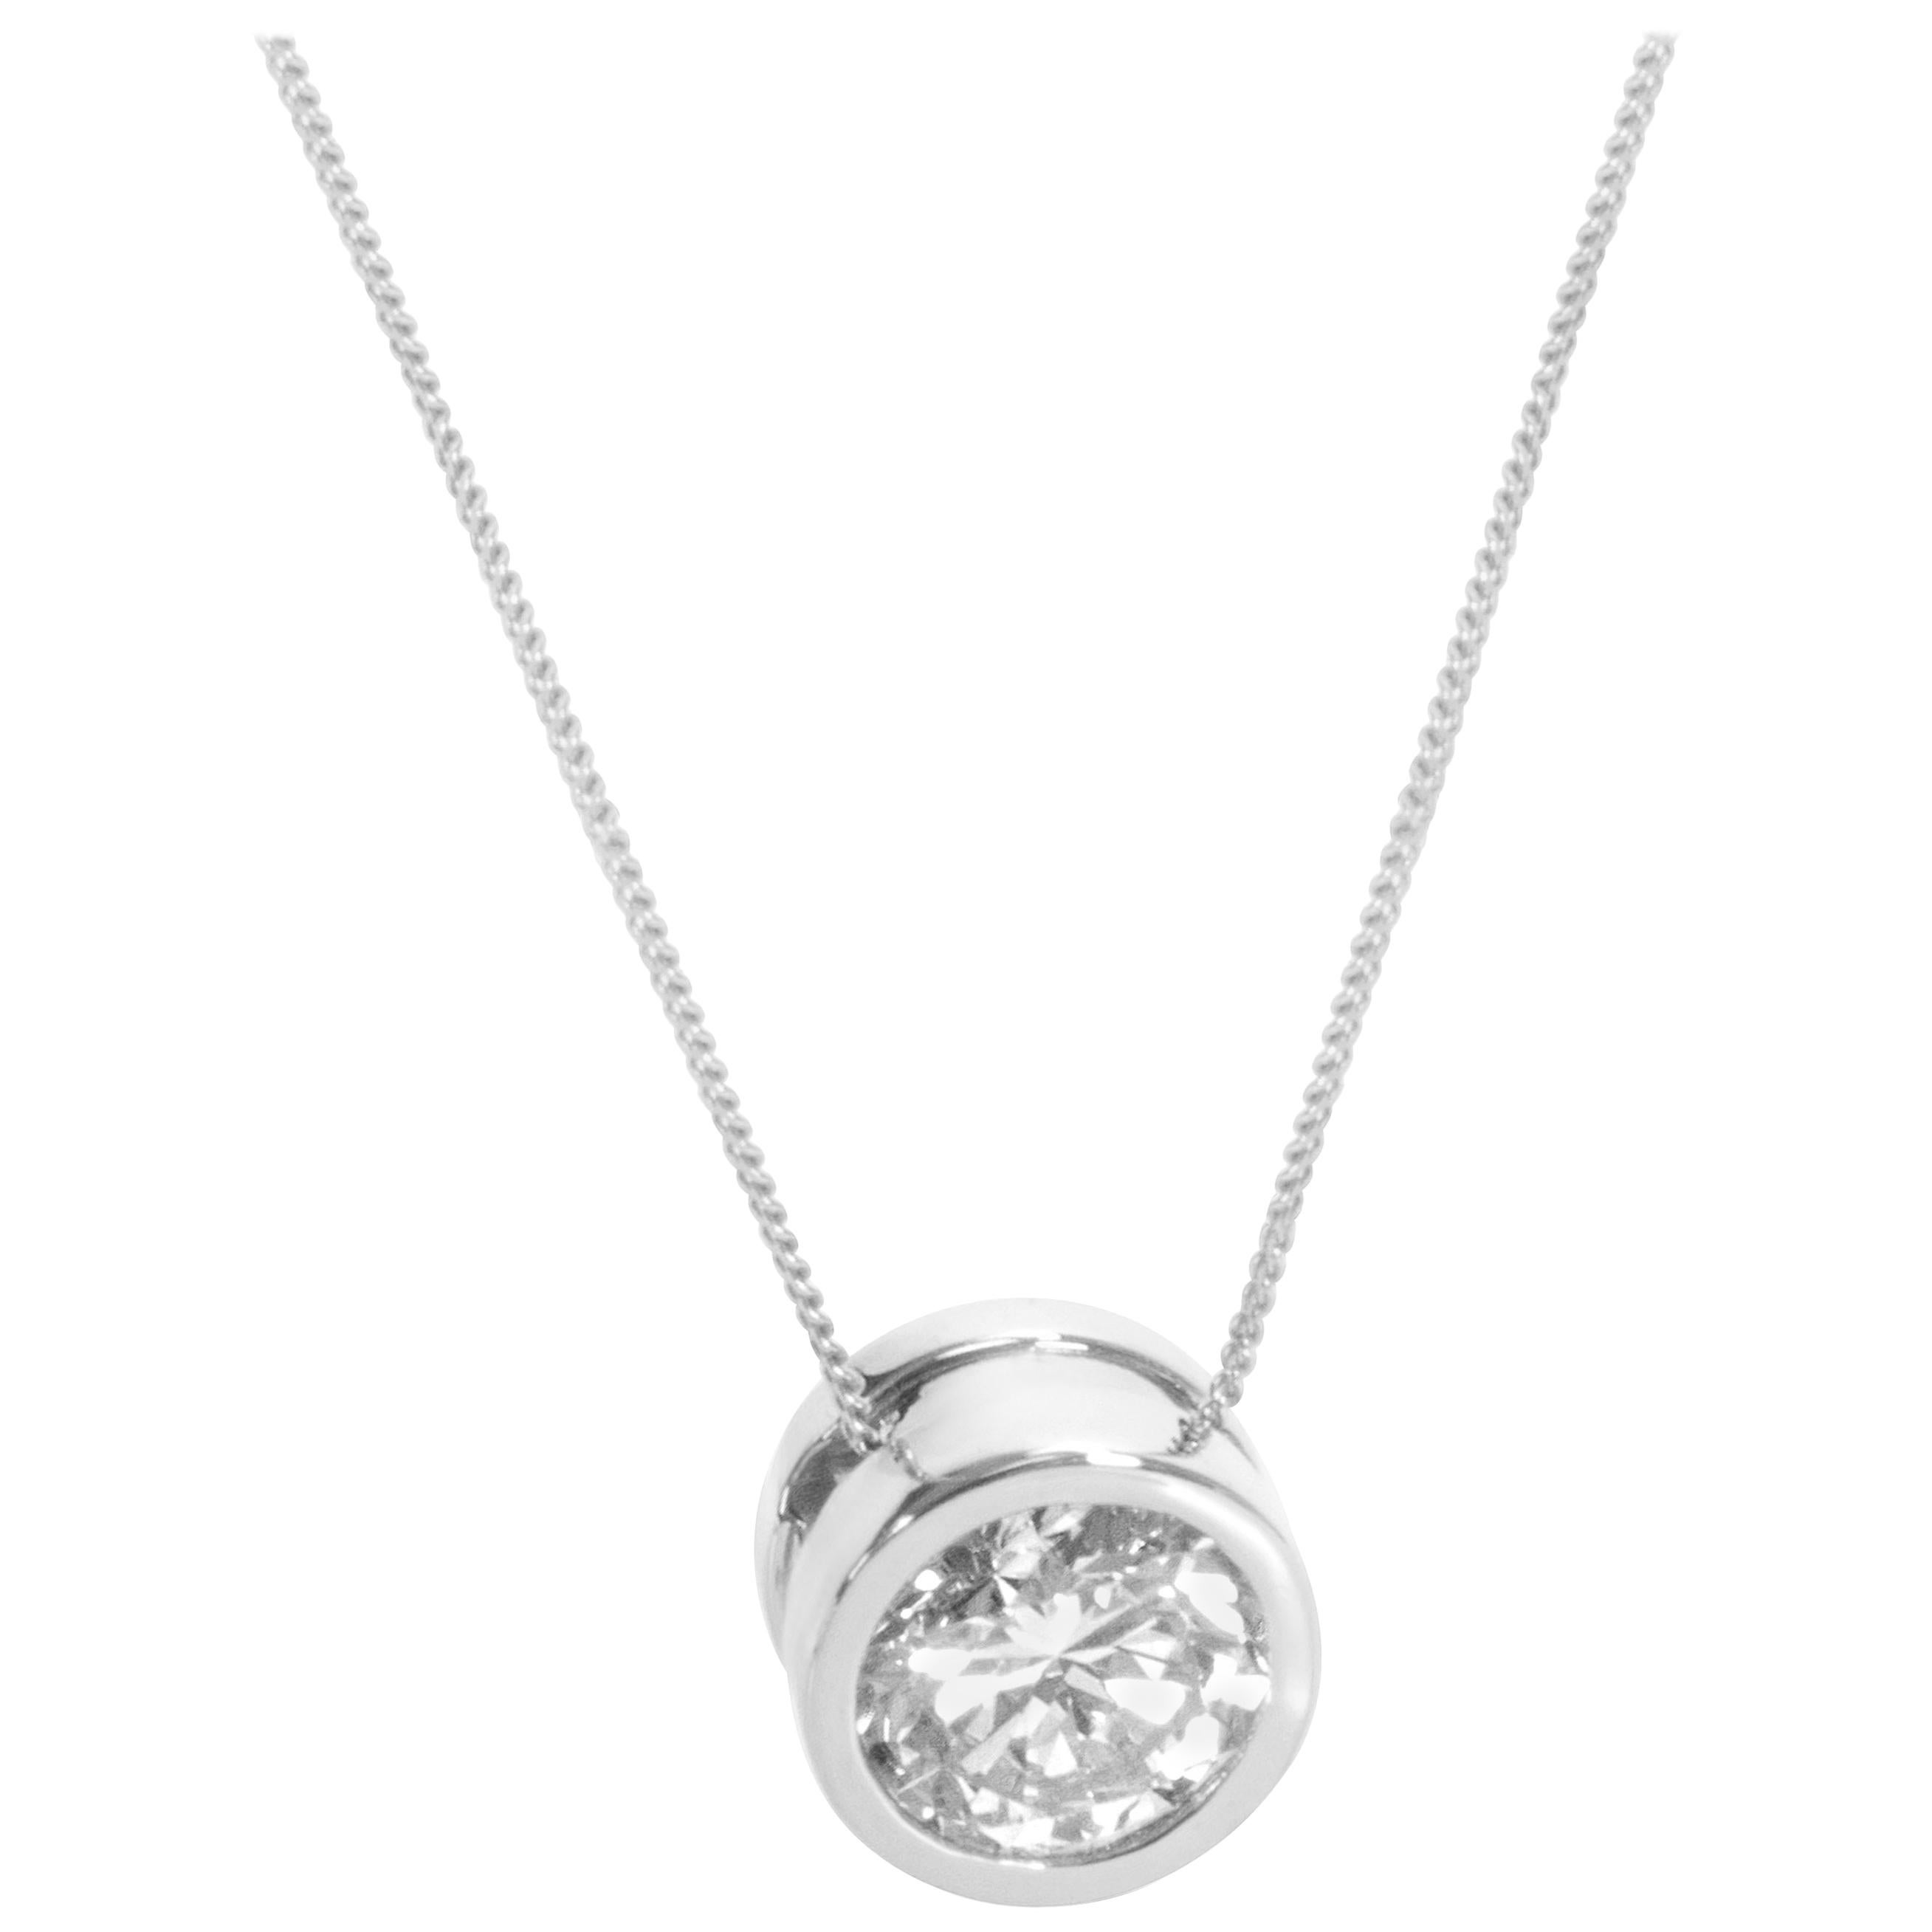 Bezel Set Diamond Solitaire Necklace in 14 Karat White Gold ‘1 Carat’